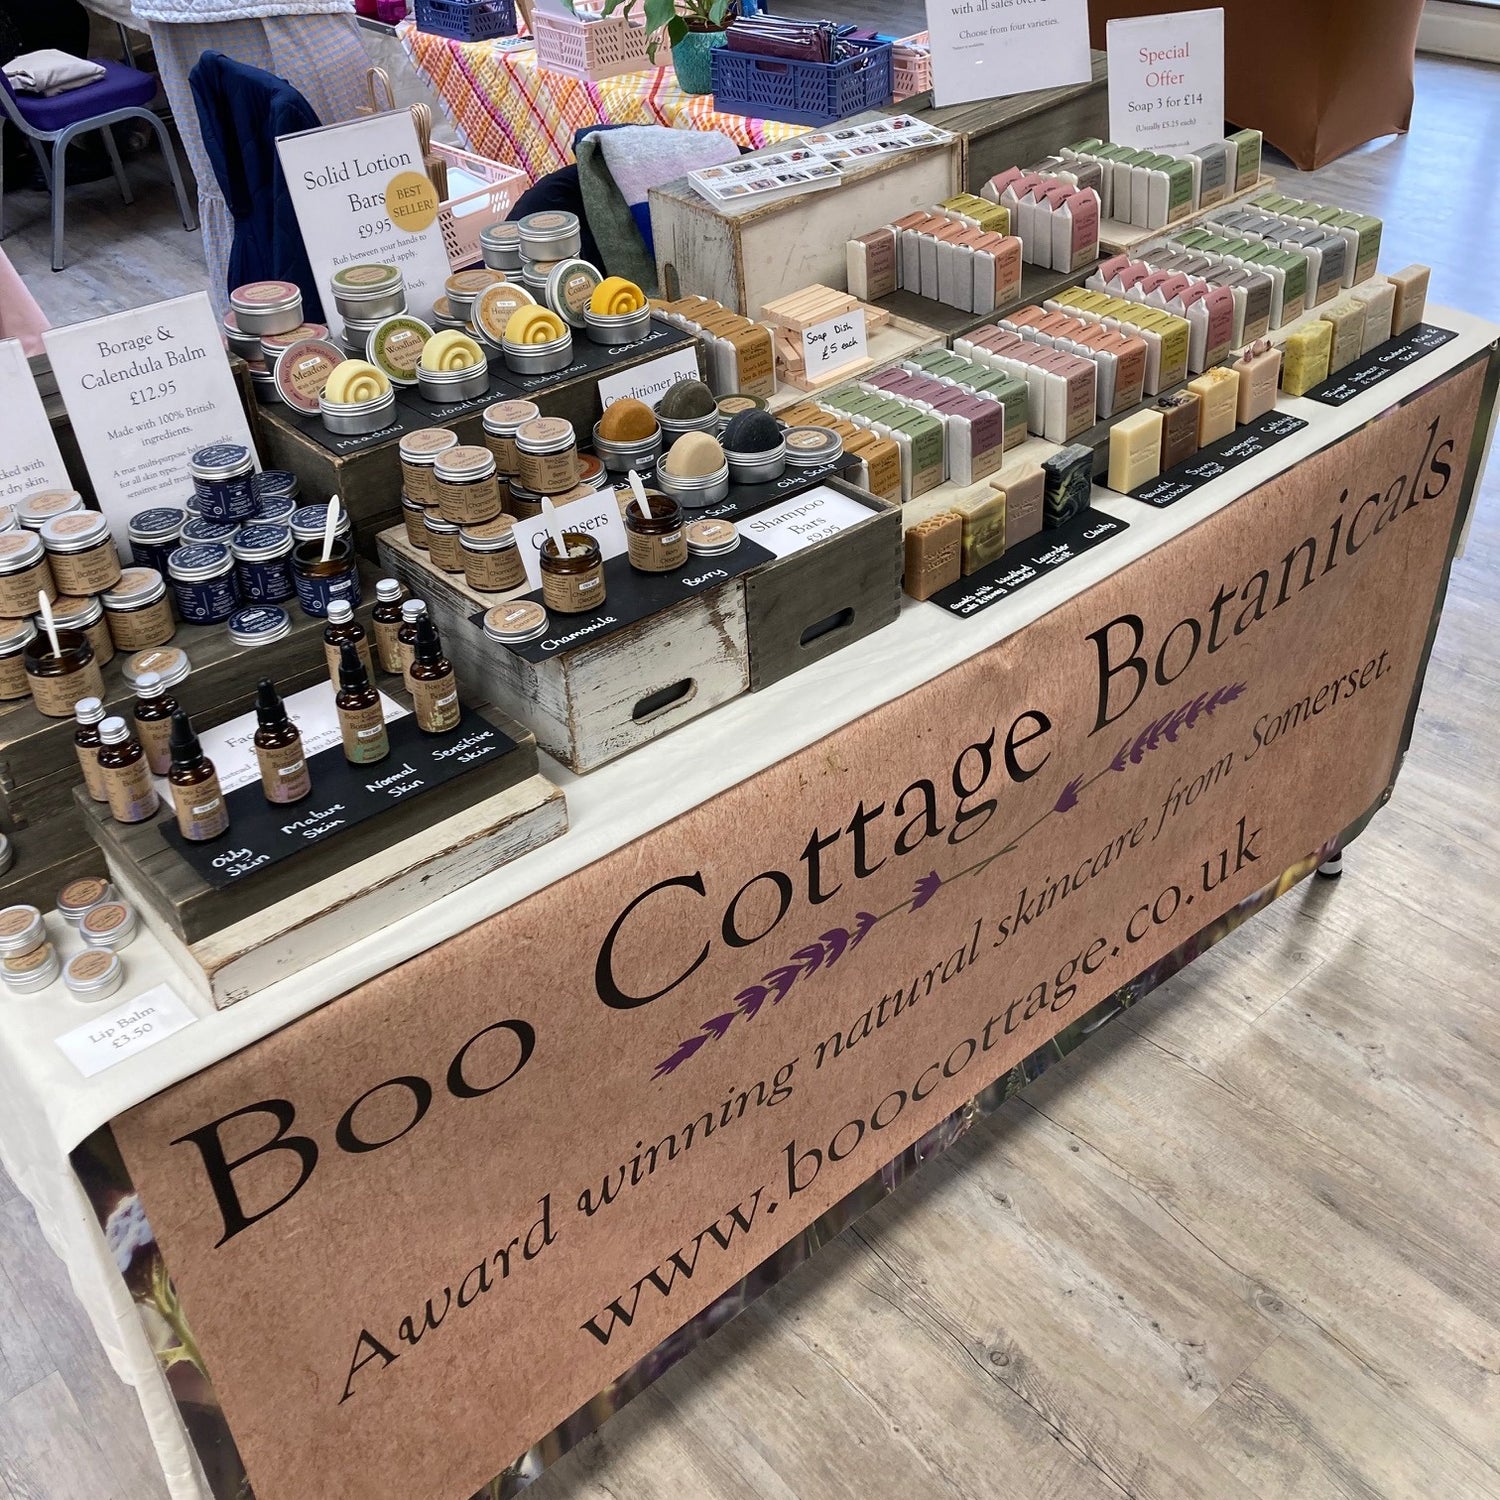 Boo Cottage Botanicals stall set up at an indoor market event